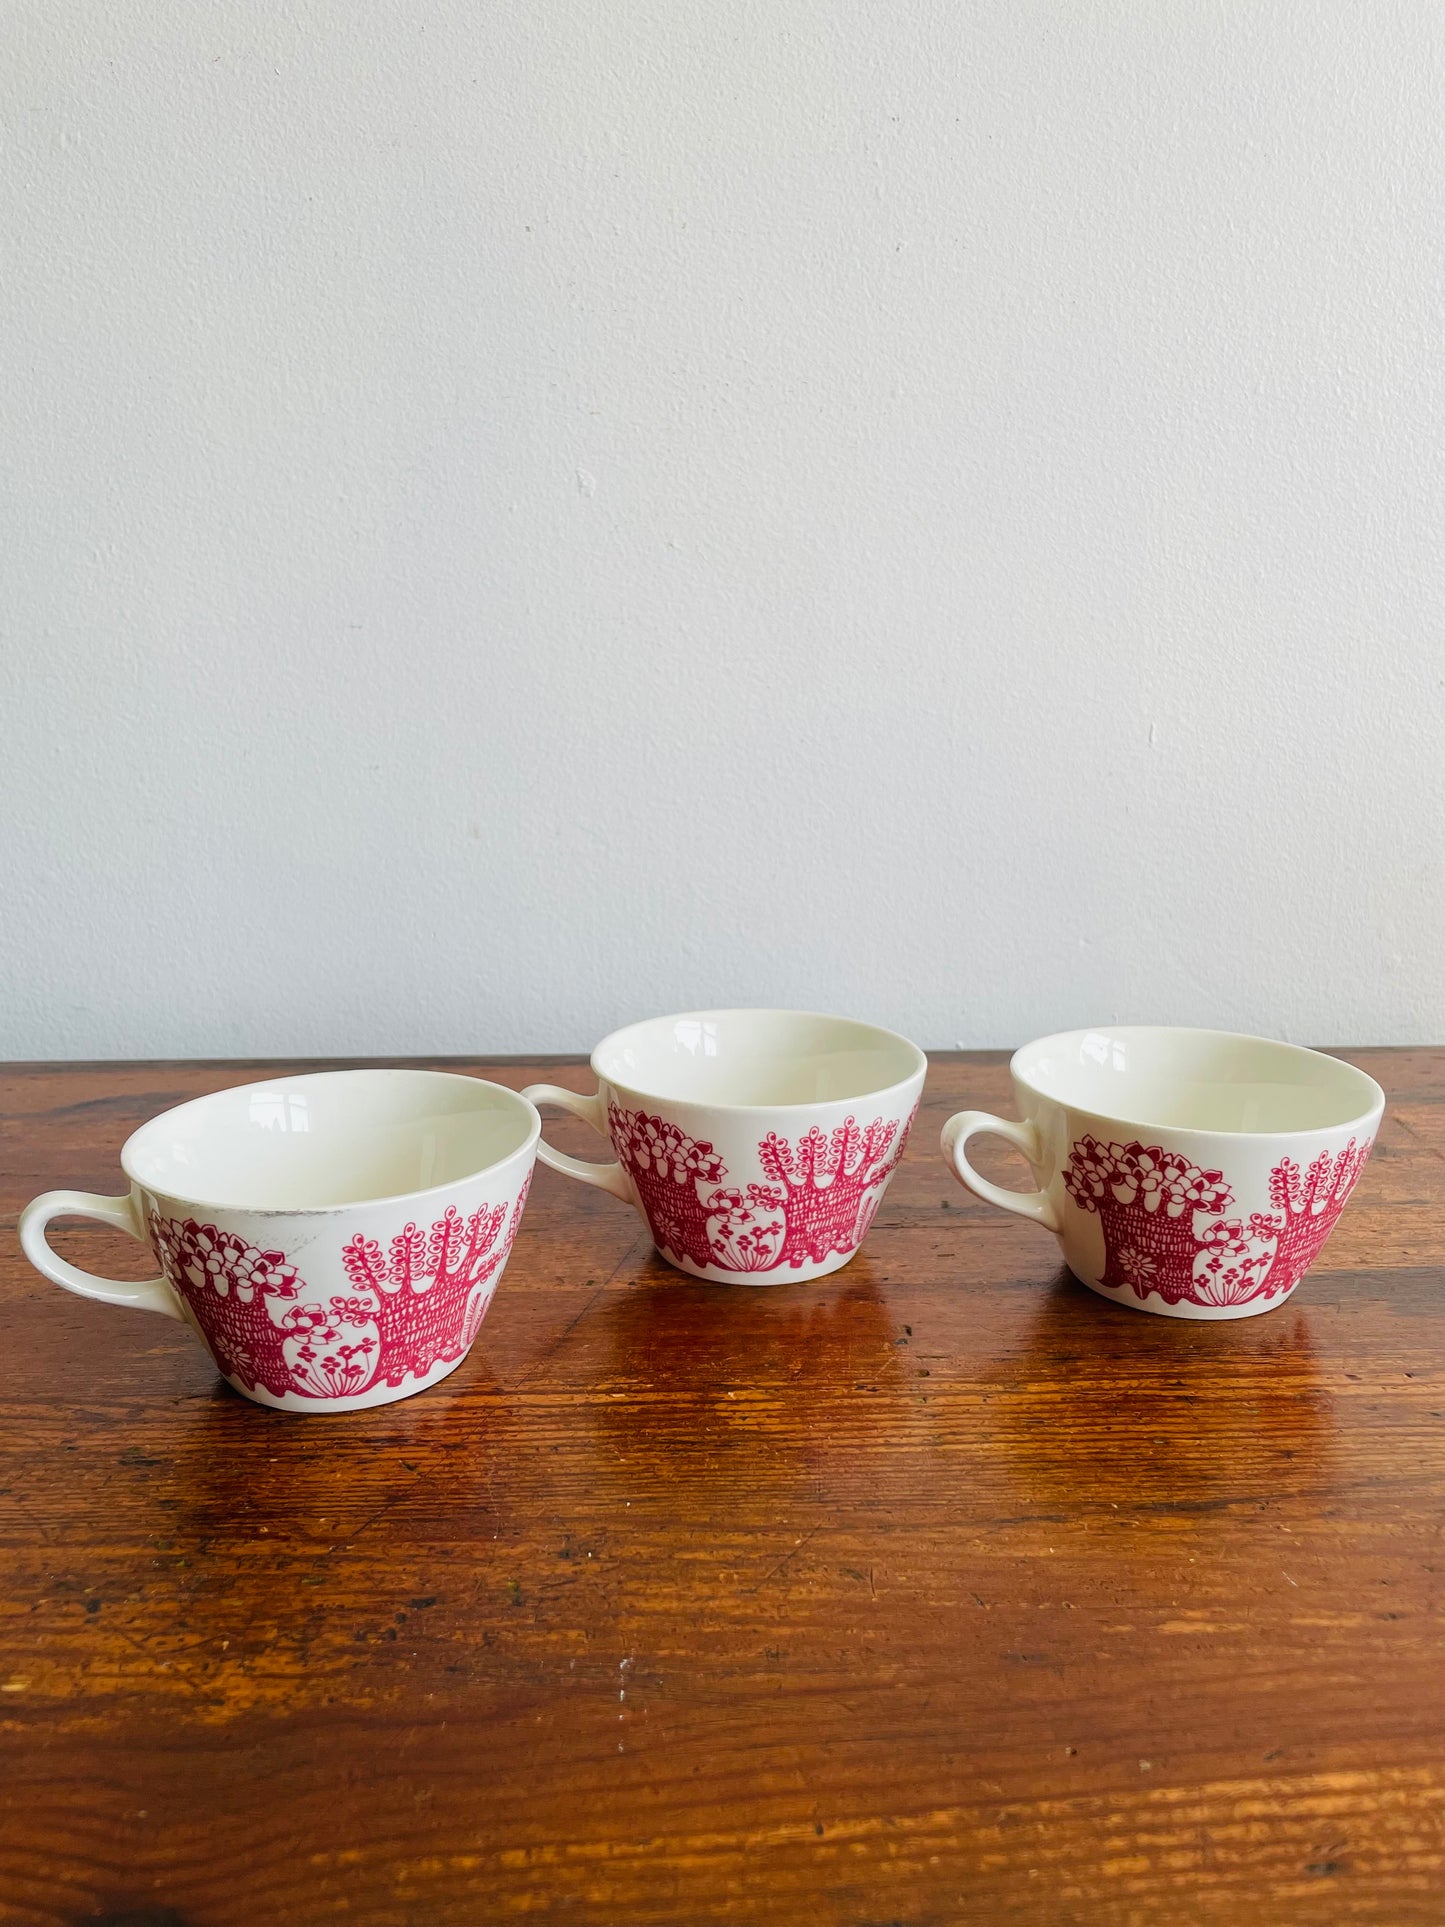 Figgjo Flint Norway Turi-Design "Arden" Set of 5 Pieces - Two Square Saucer Plates & Three Tea Cups